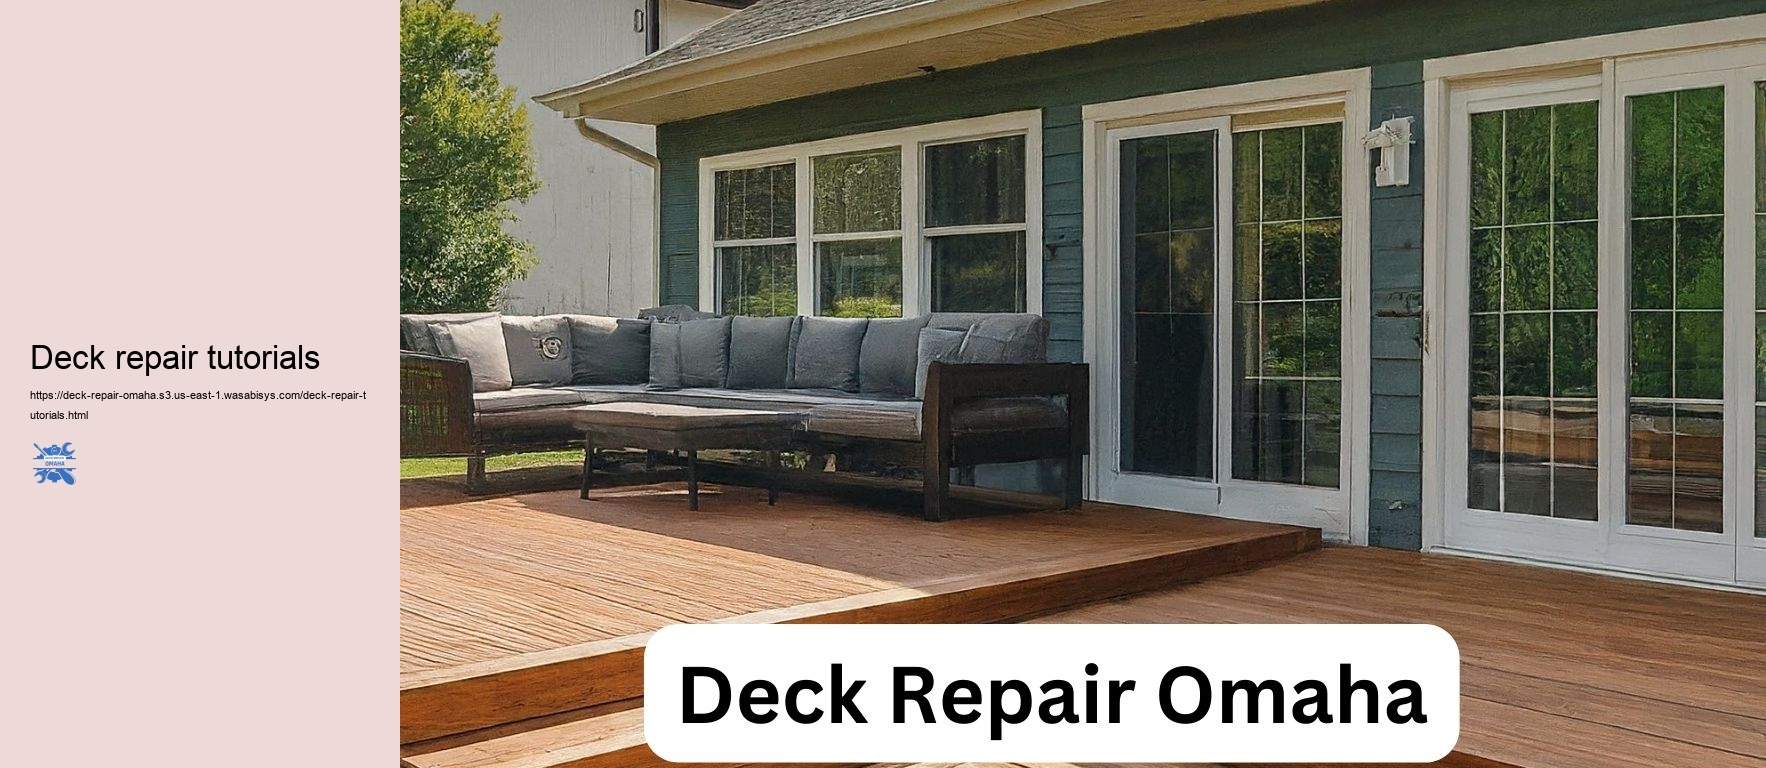 Deck repair tutorials